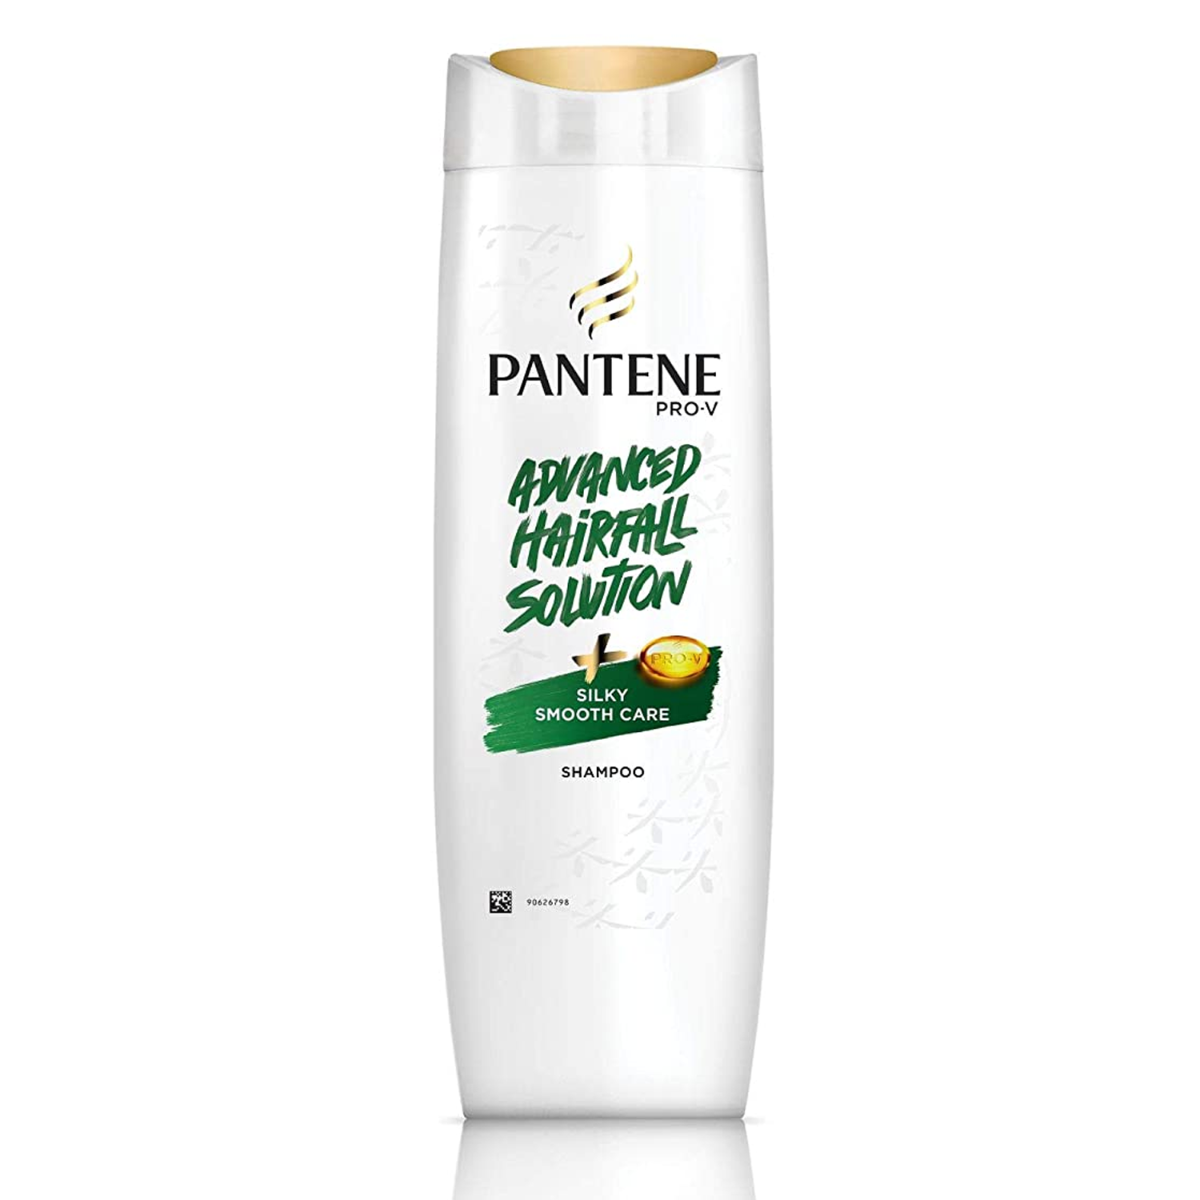 Pantene Advanced Hair Fall Solution Shampoo - Silky Smooth Care, 340ml